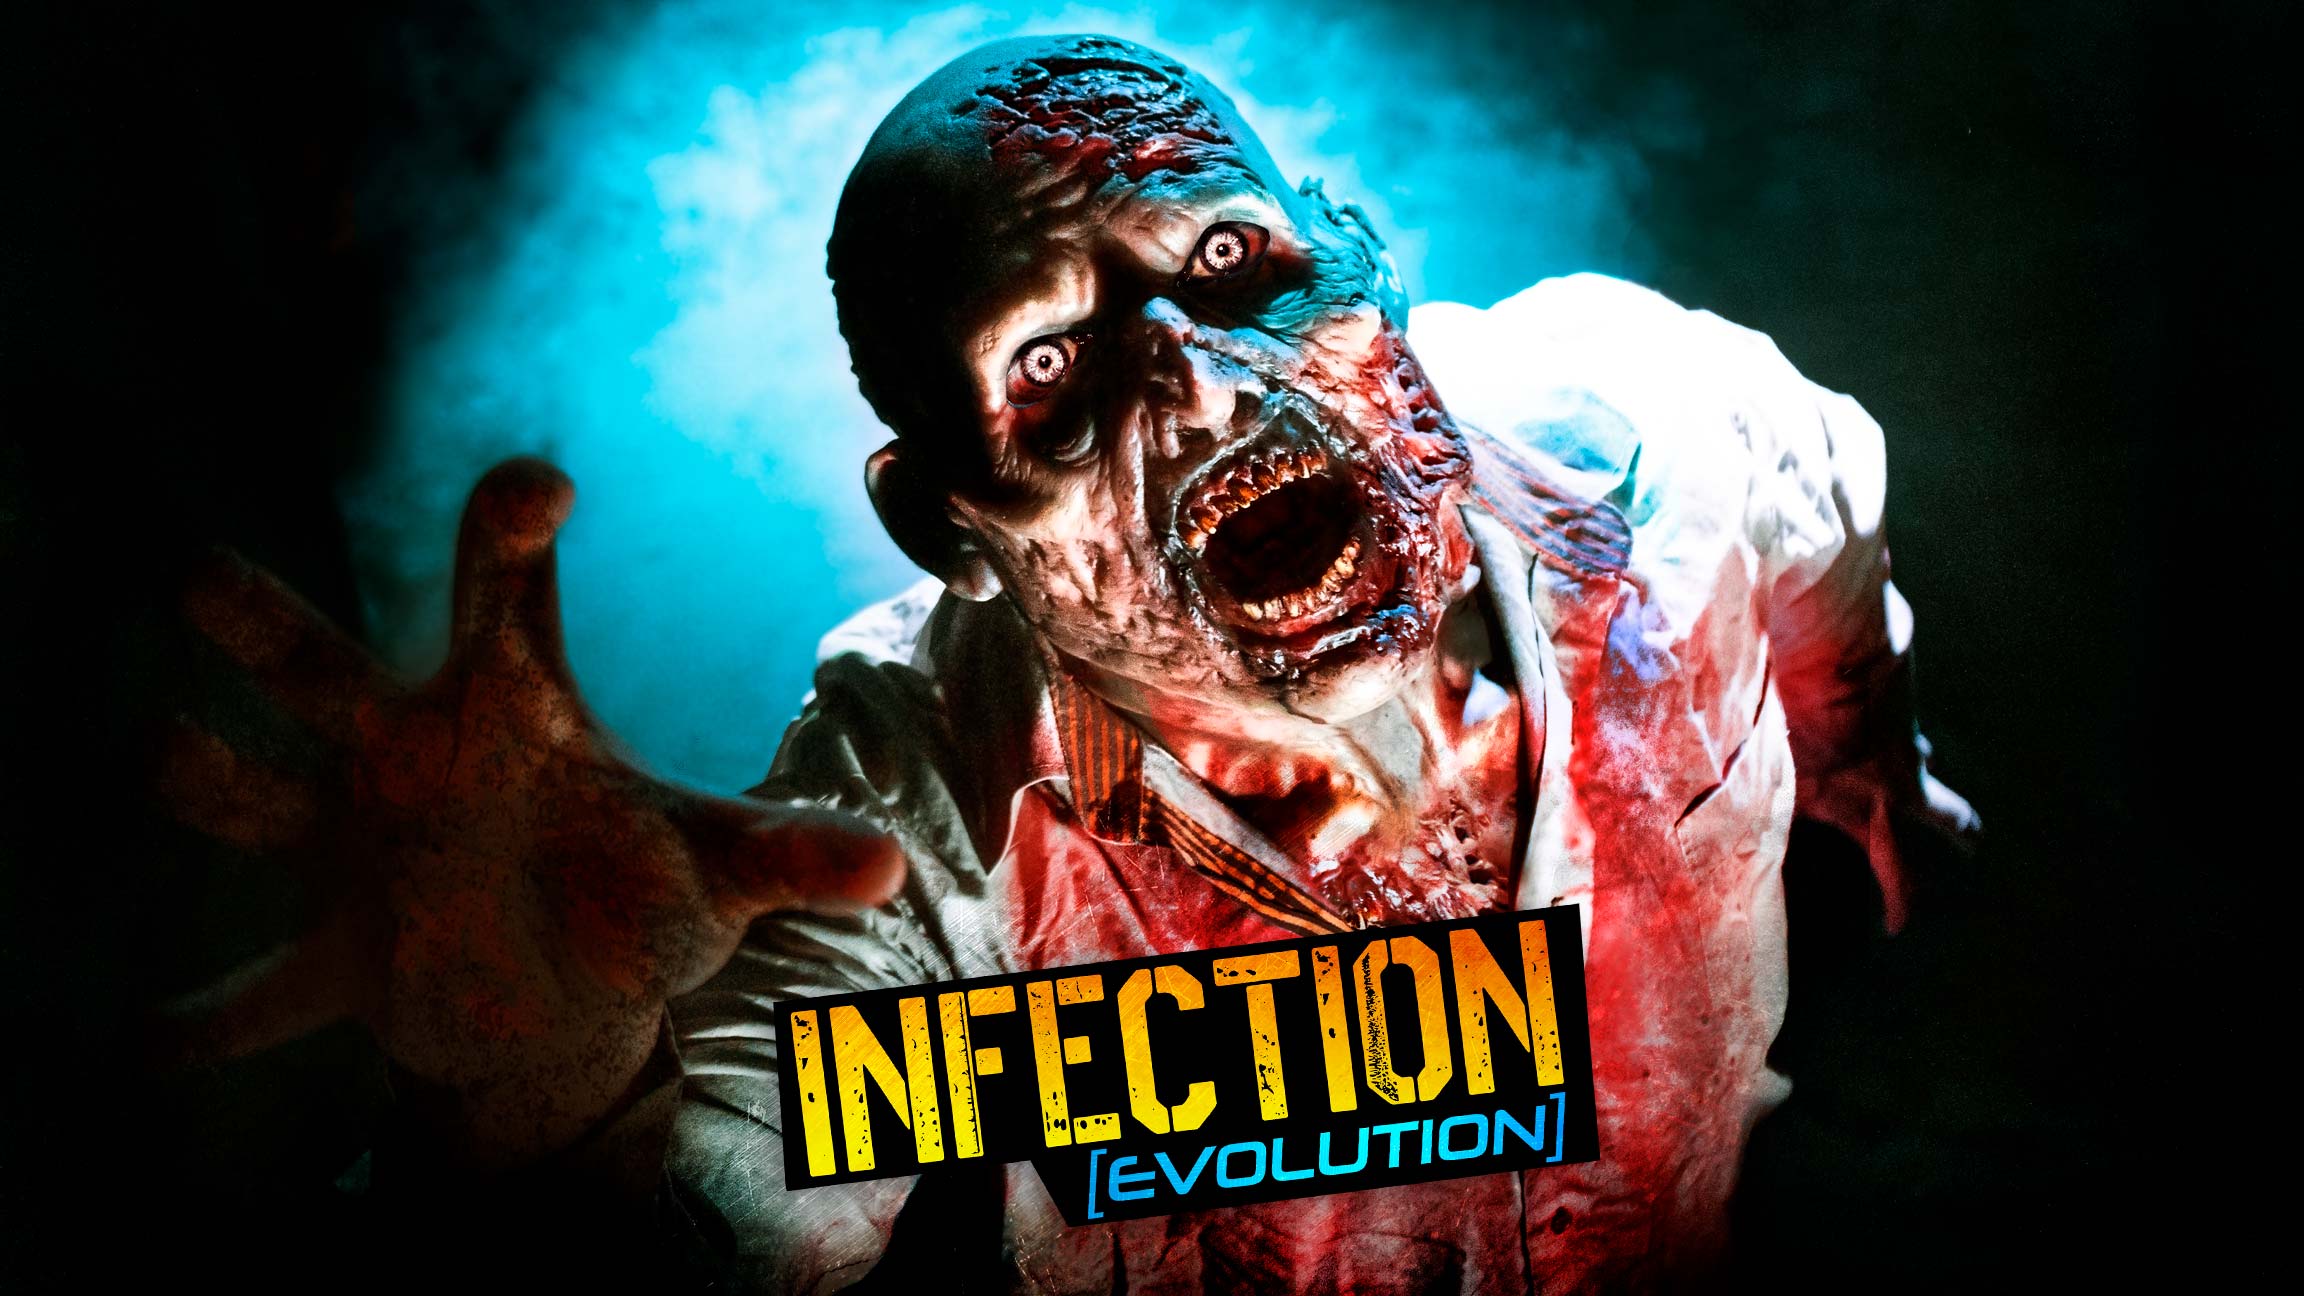 Infection Evolution - Horror Box, Museo de Cera Barcelona - Review Escape Room